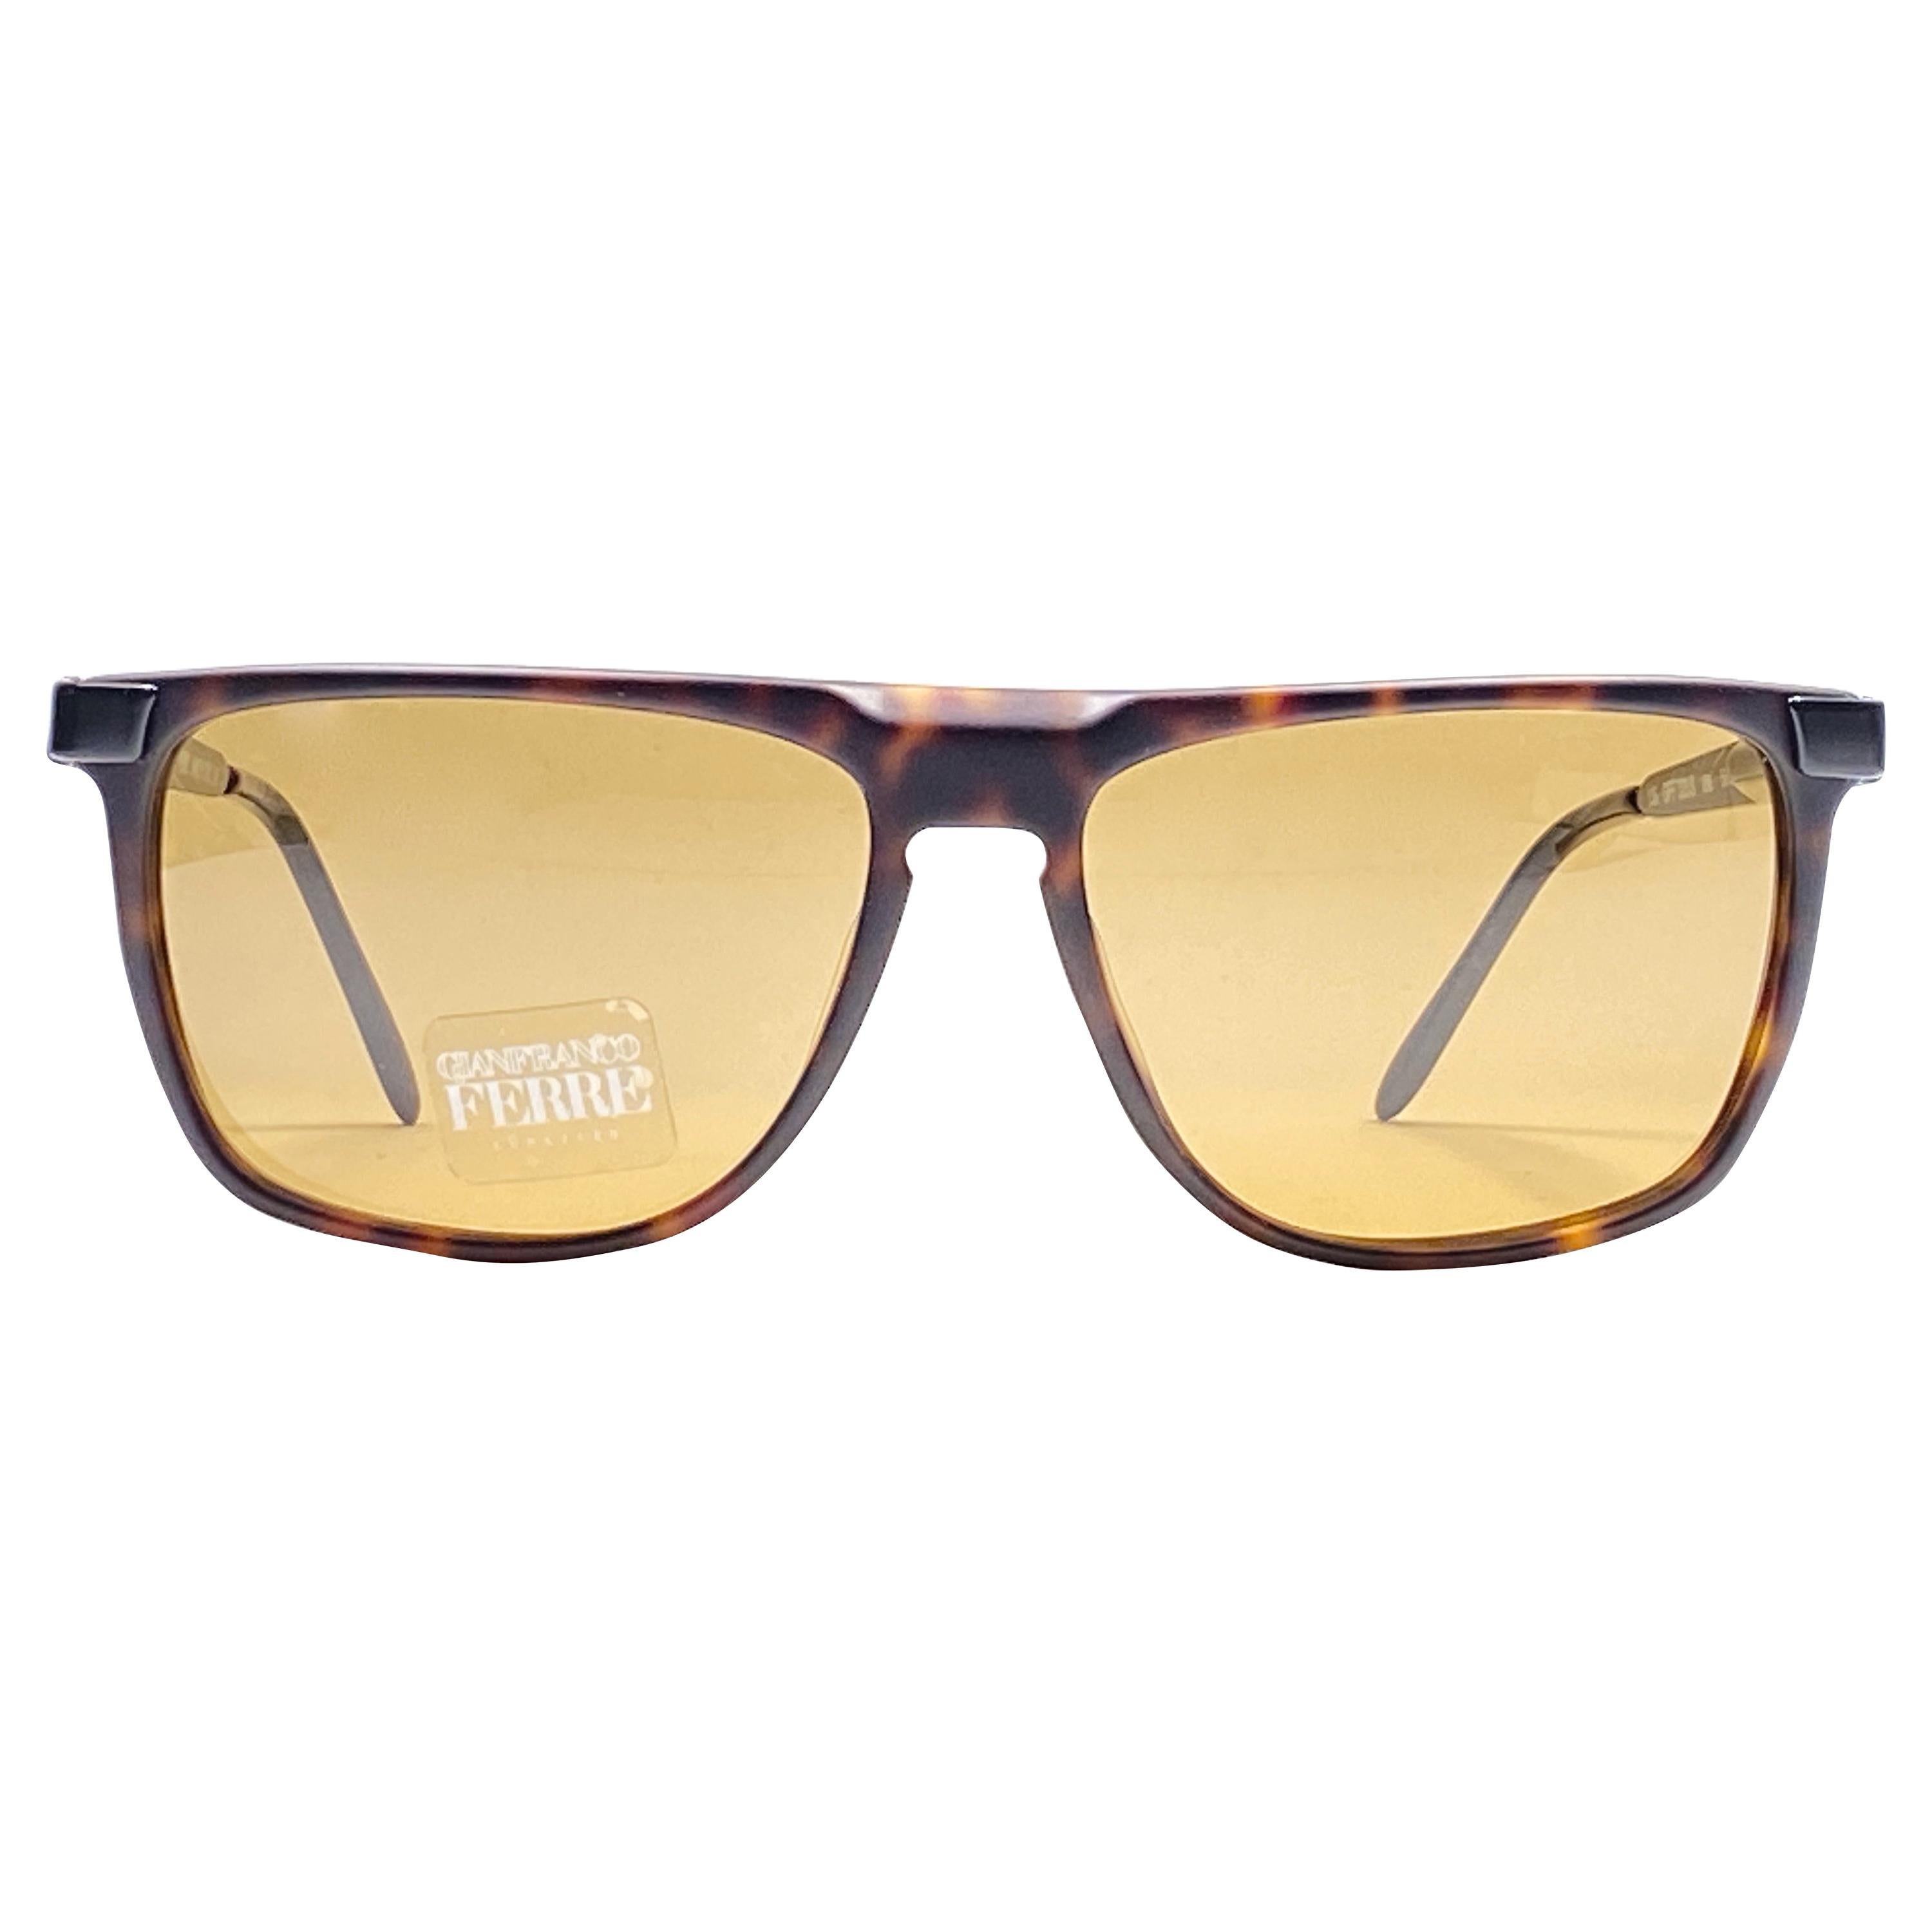 New Vintage Gianfranco Ferré GFF 320 Black  / Dark Amber 1990 Italy Sunglasses